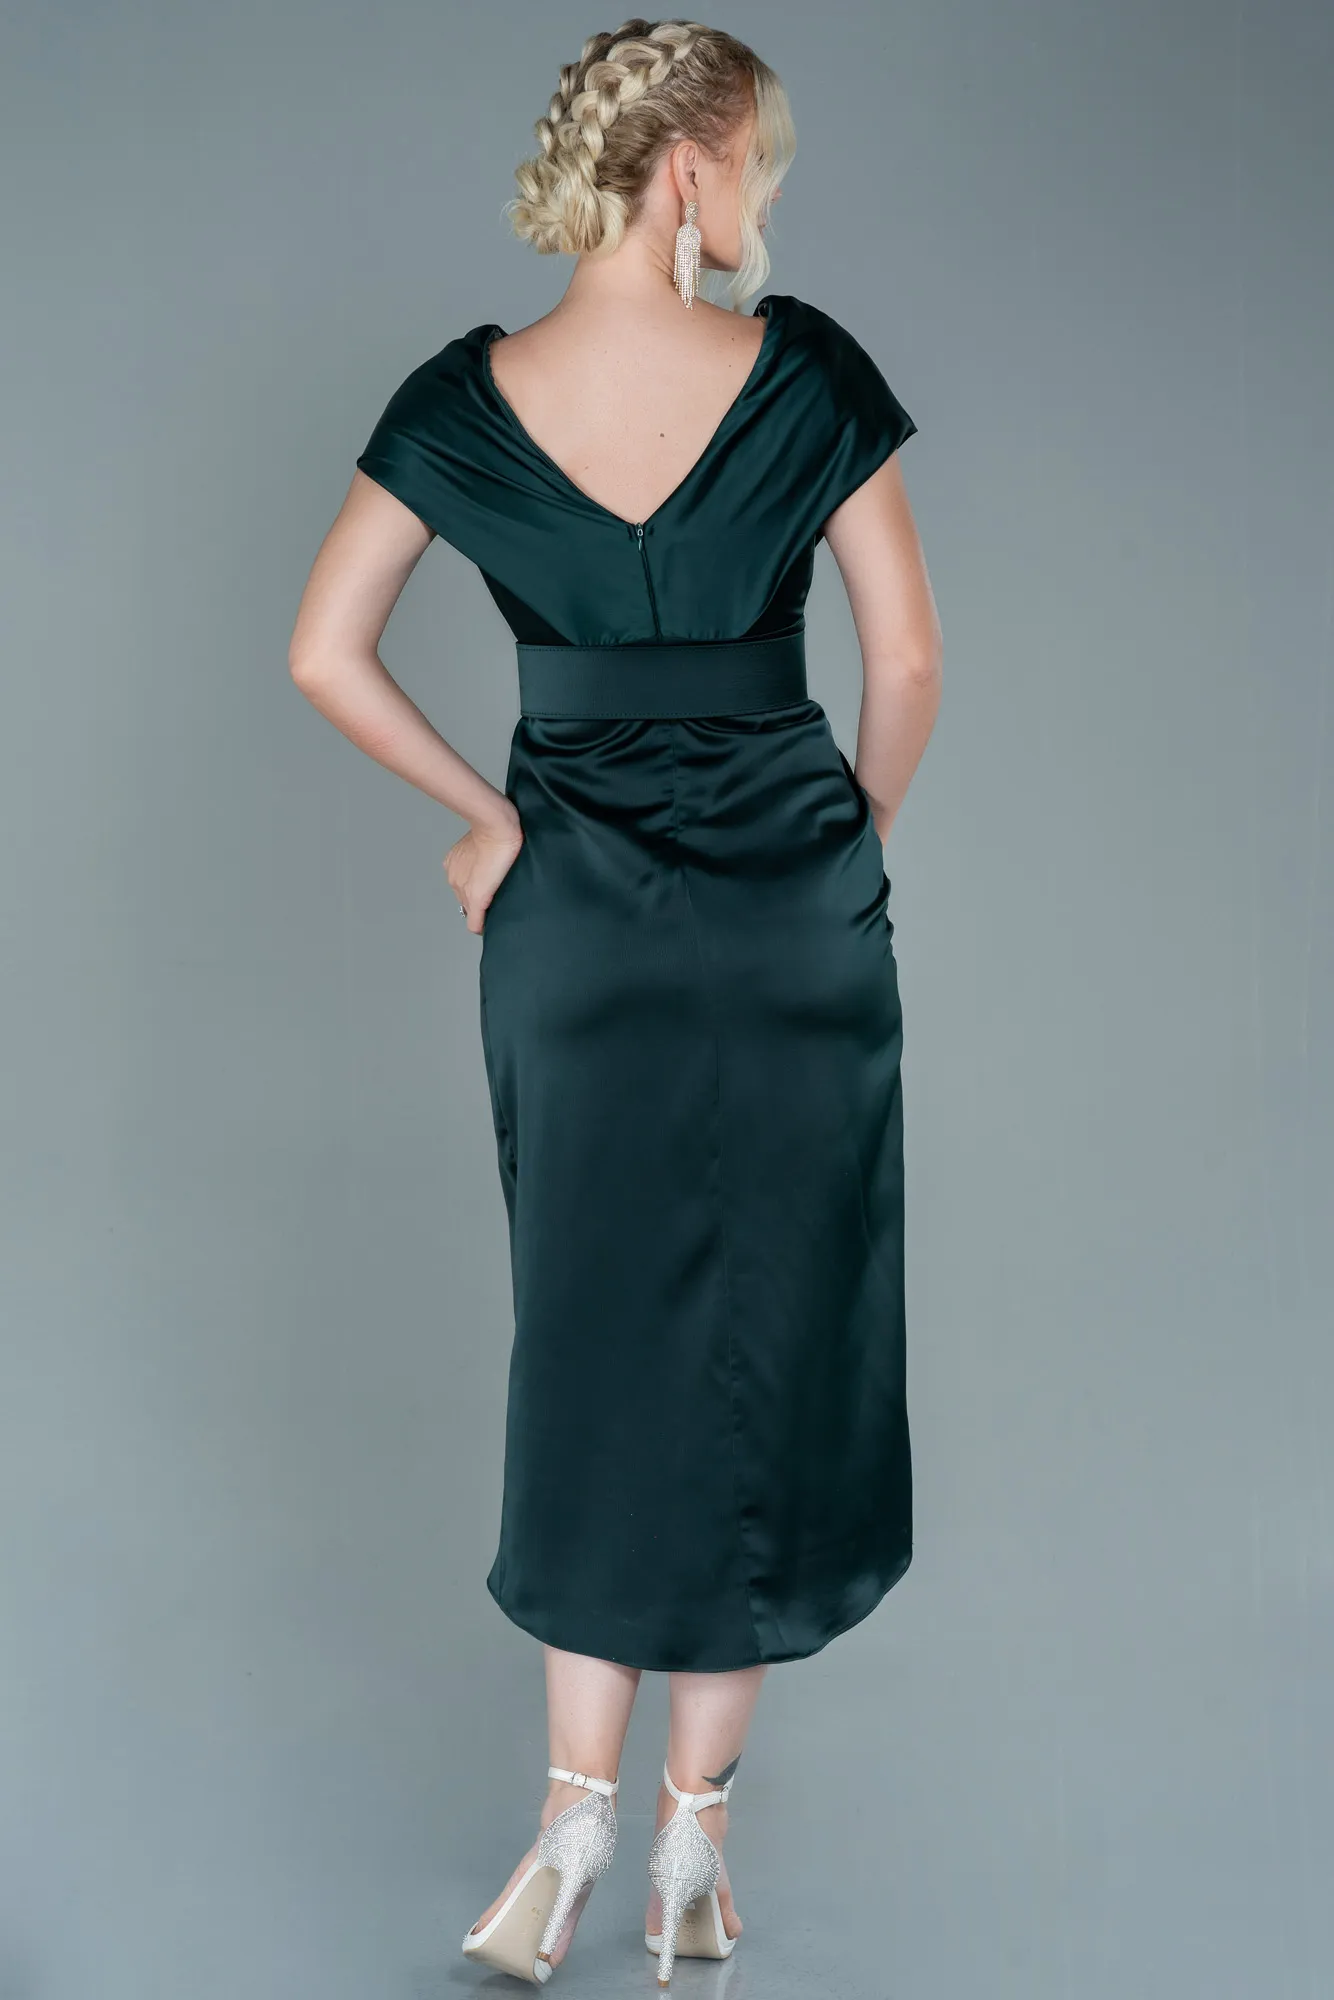 Emerald Green-Short Satin Invitation Dress ABK1107